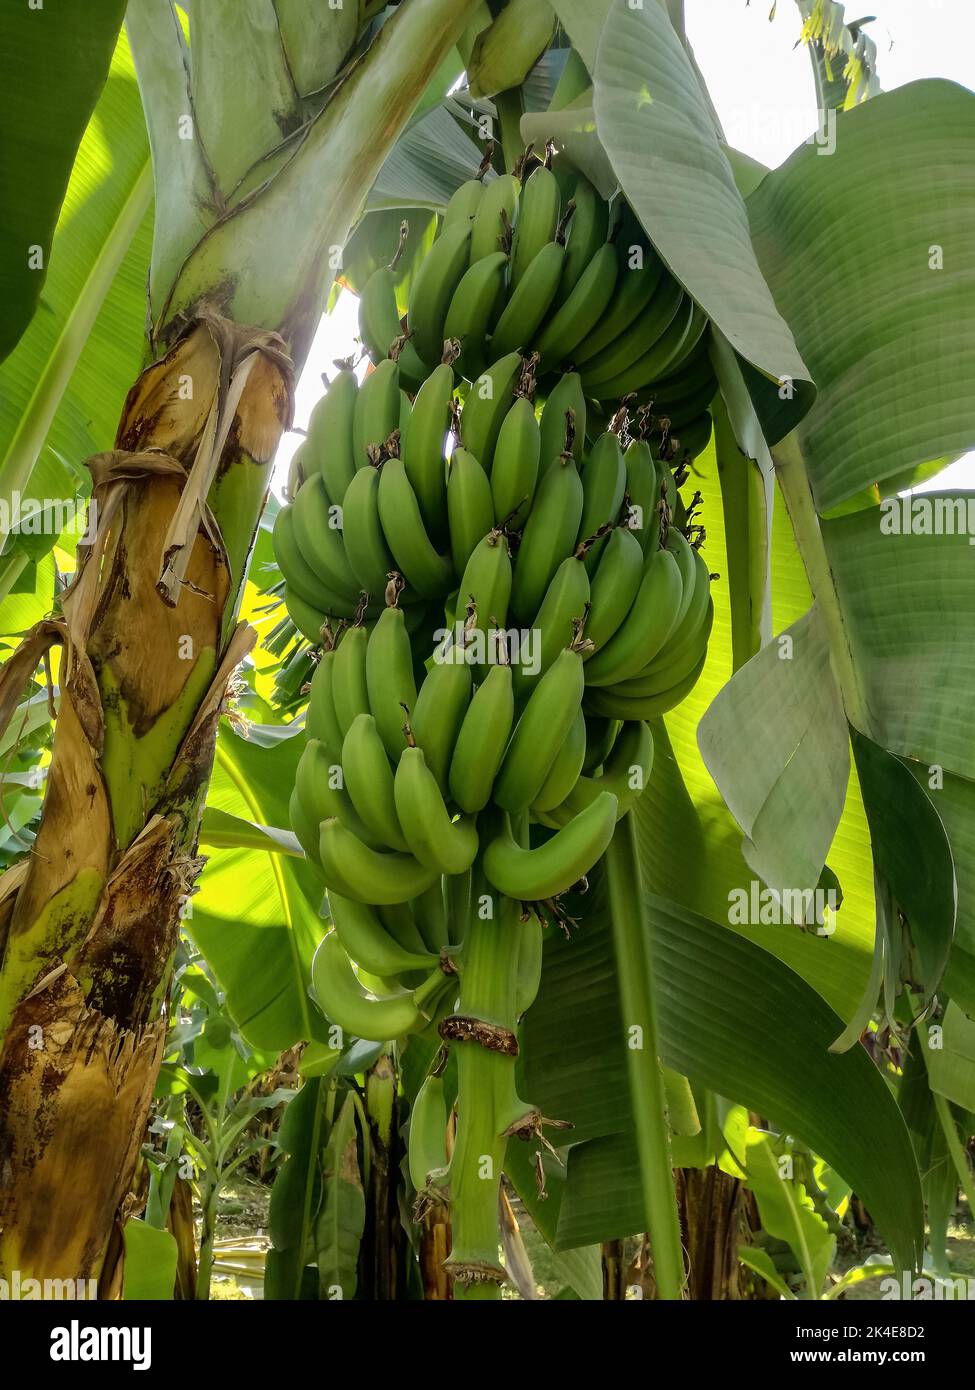 Banana grove, plantation. Banana trees with ripening bananas. Harvest coming soon. Vertical photo. Close-up. Selective focus. Stock Photo